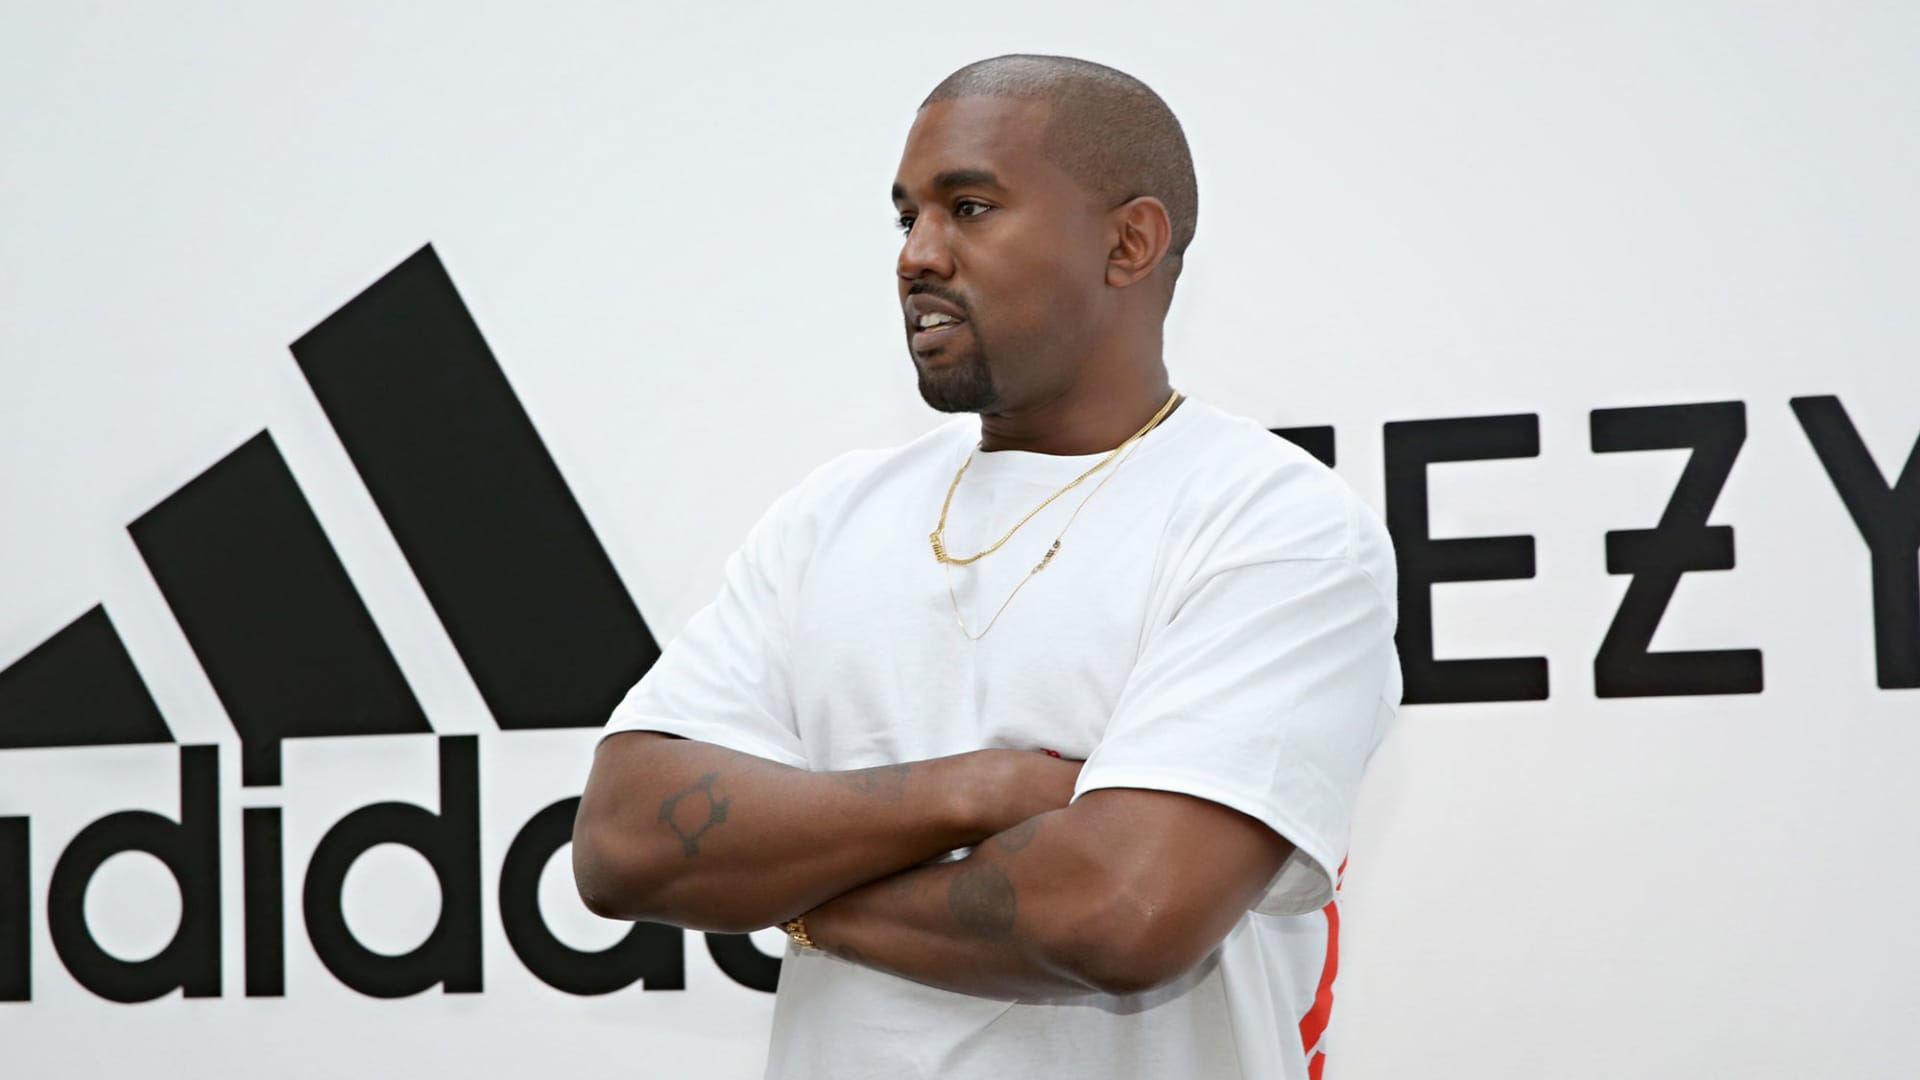 Mislukking Darts Pardon Adidas warns of big earnings hit after ending Ye partnership